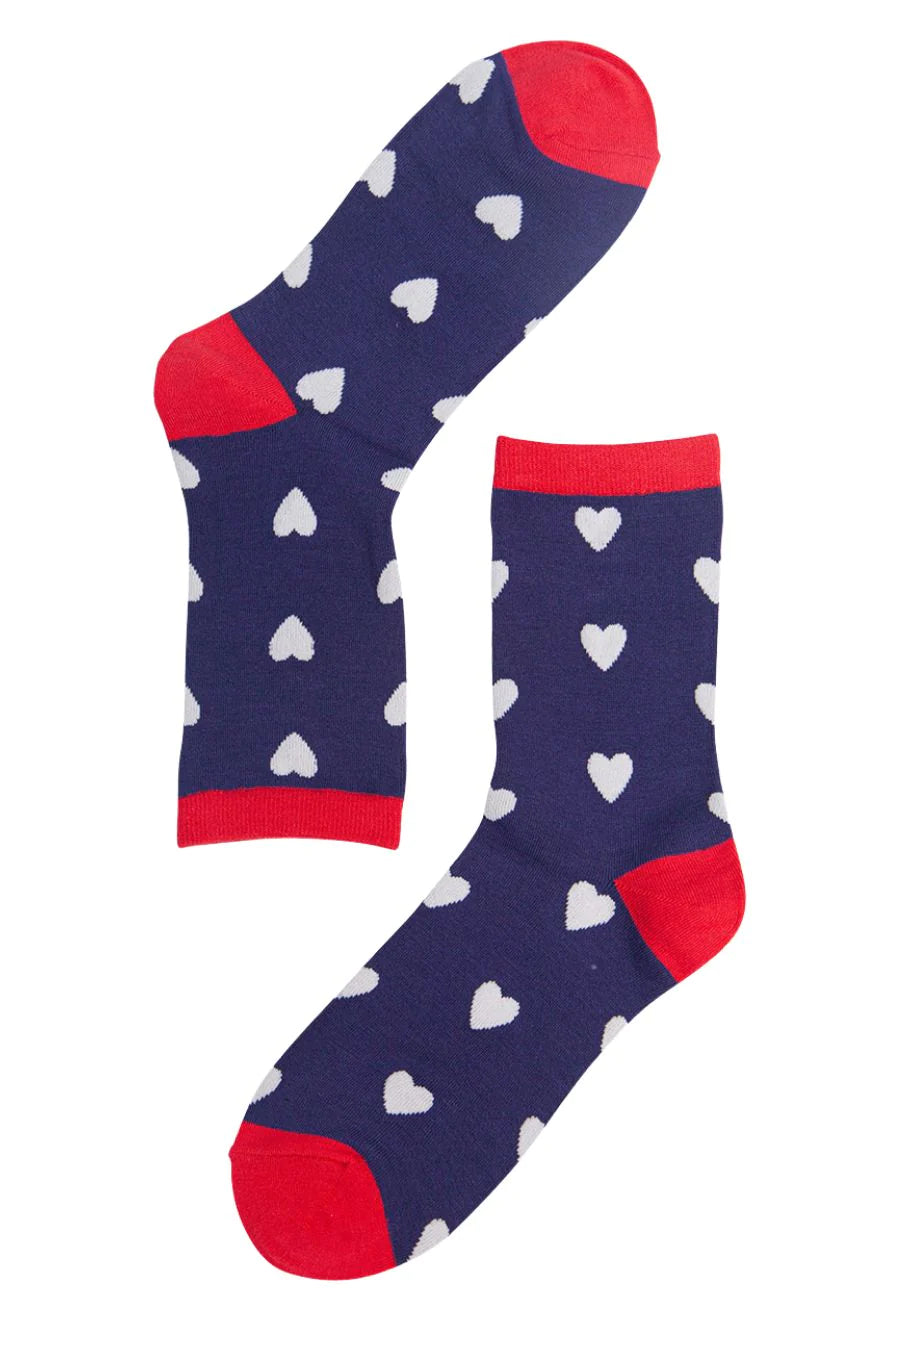 Navy & Red Heart Socks